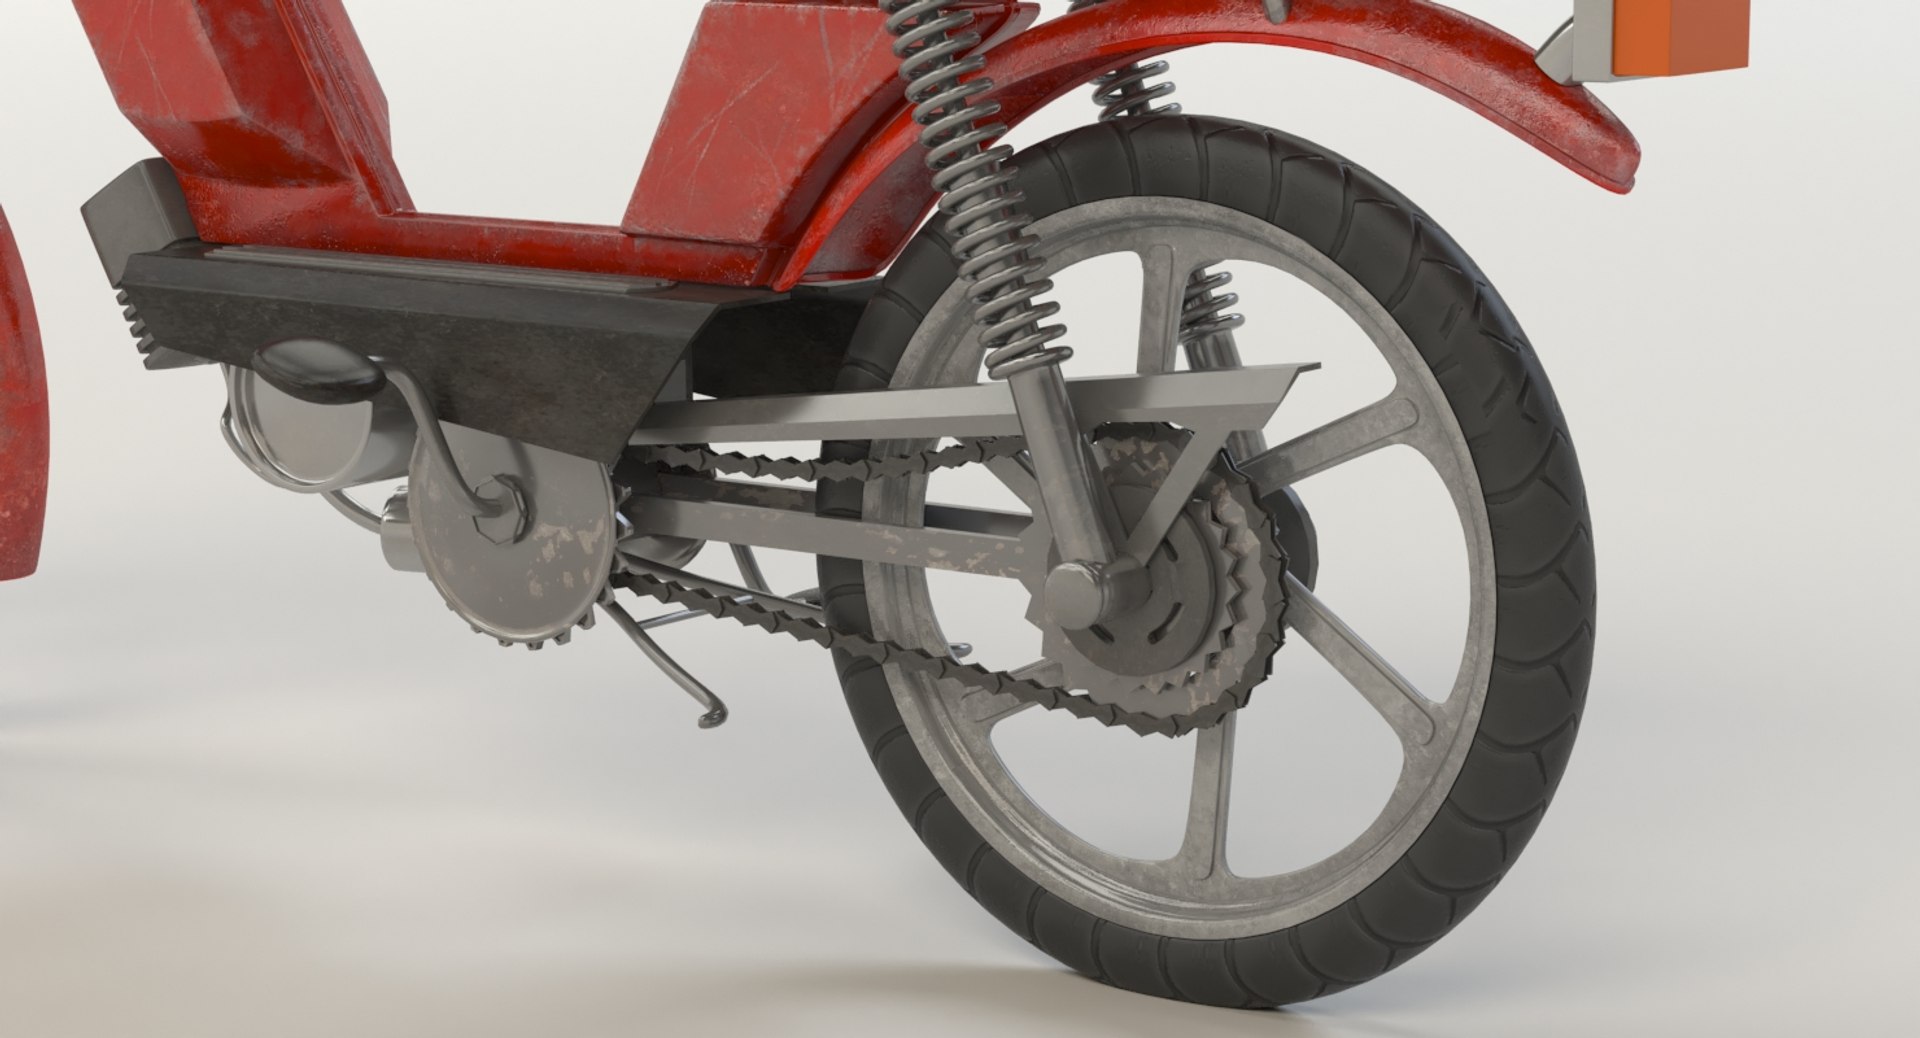 Moped bike 3D model - TurboSquid 1433002